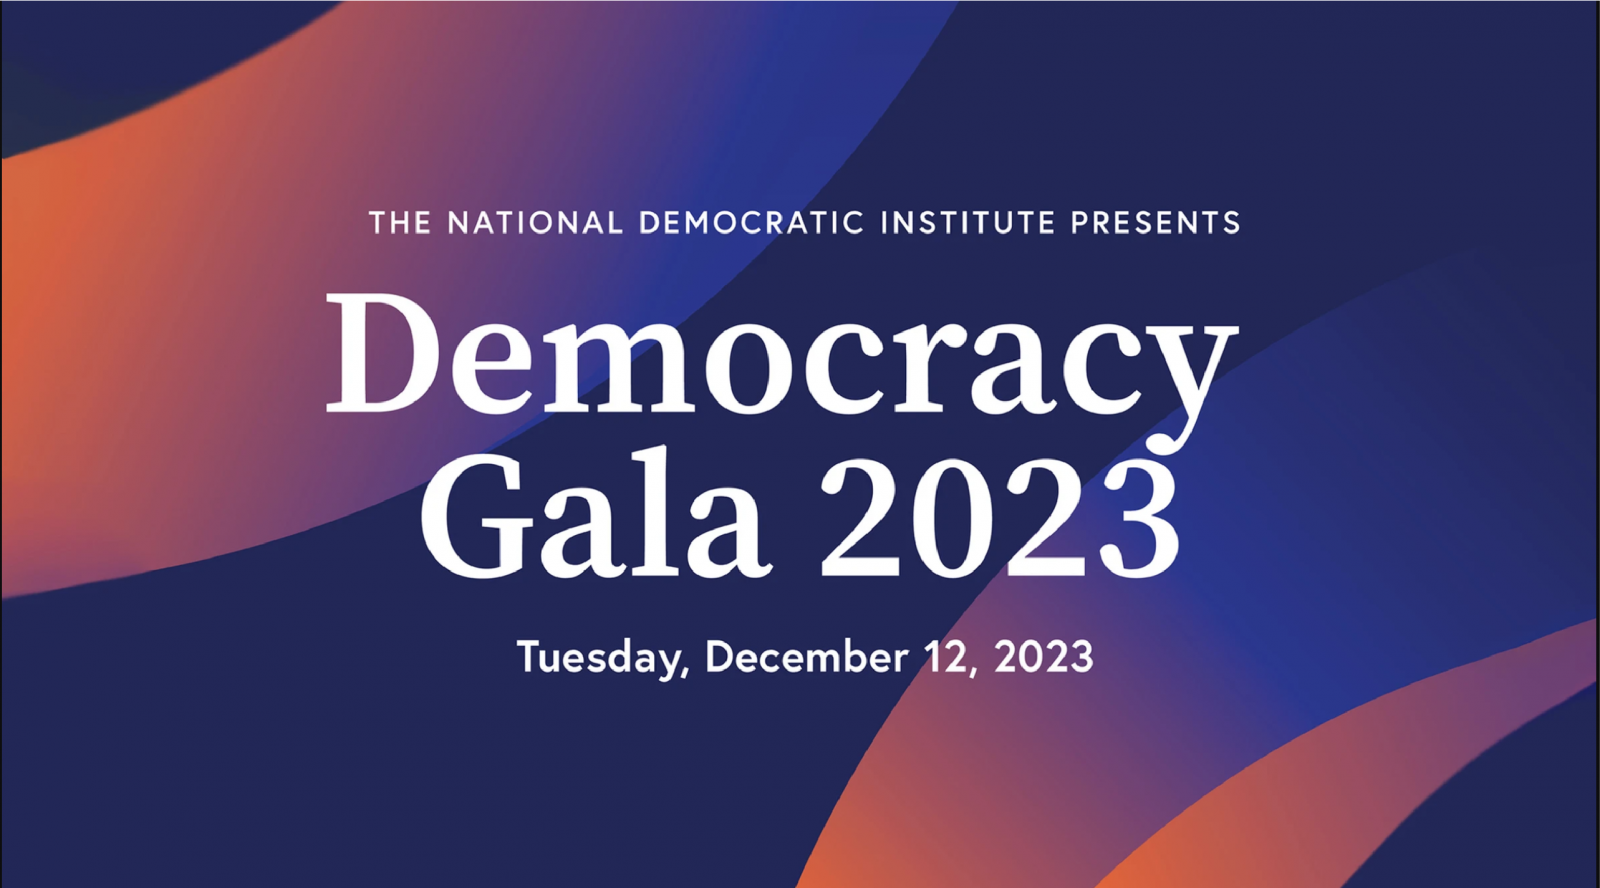 Democracy Gala 2023